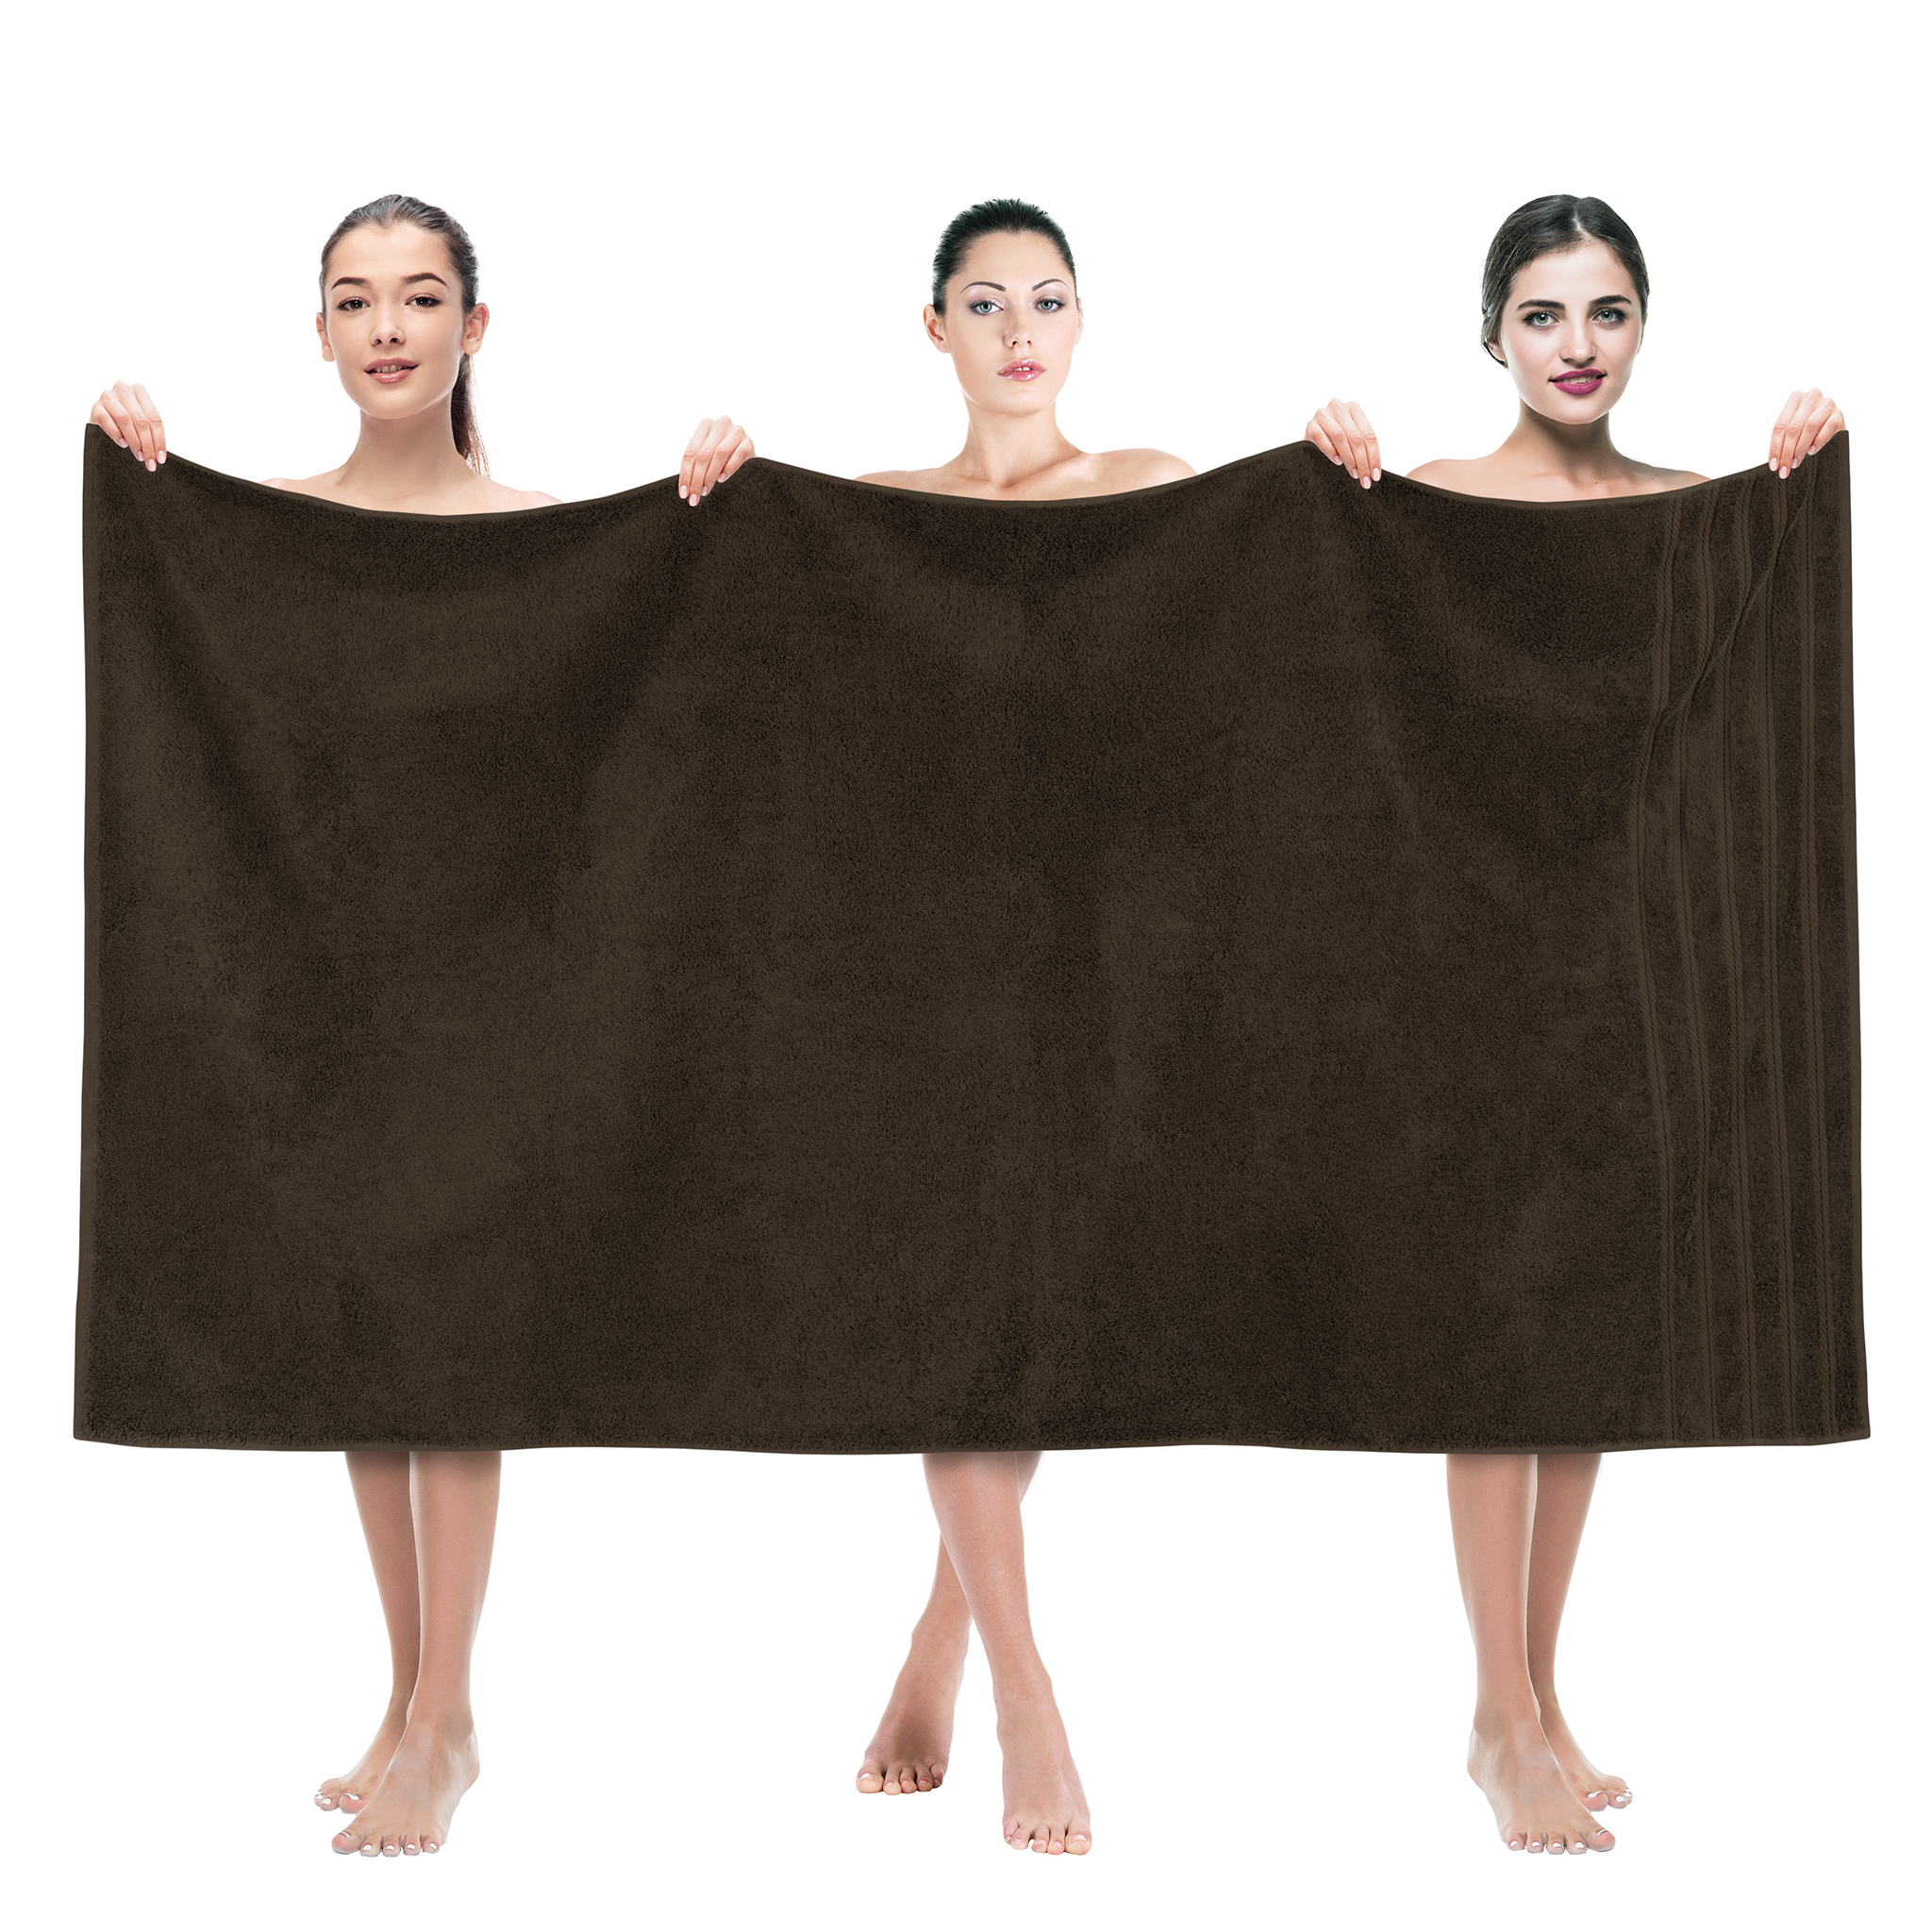 American Soft Linen - 35x70 Jumbo Bath Sheet Turkish Bath Towel - 16 Piece Case Pack - Chocolate-Brown - 1